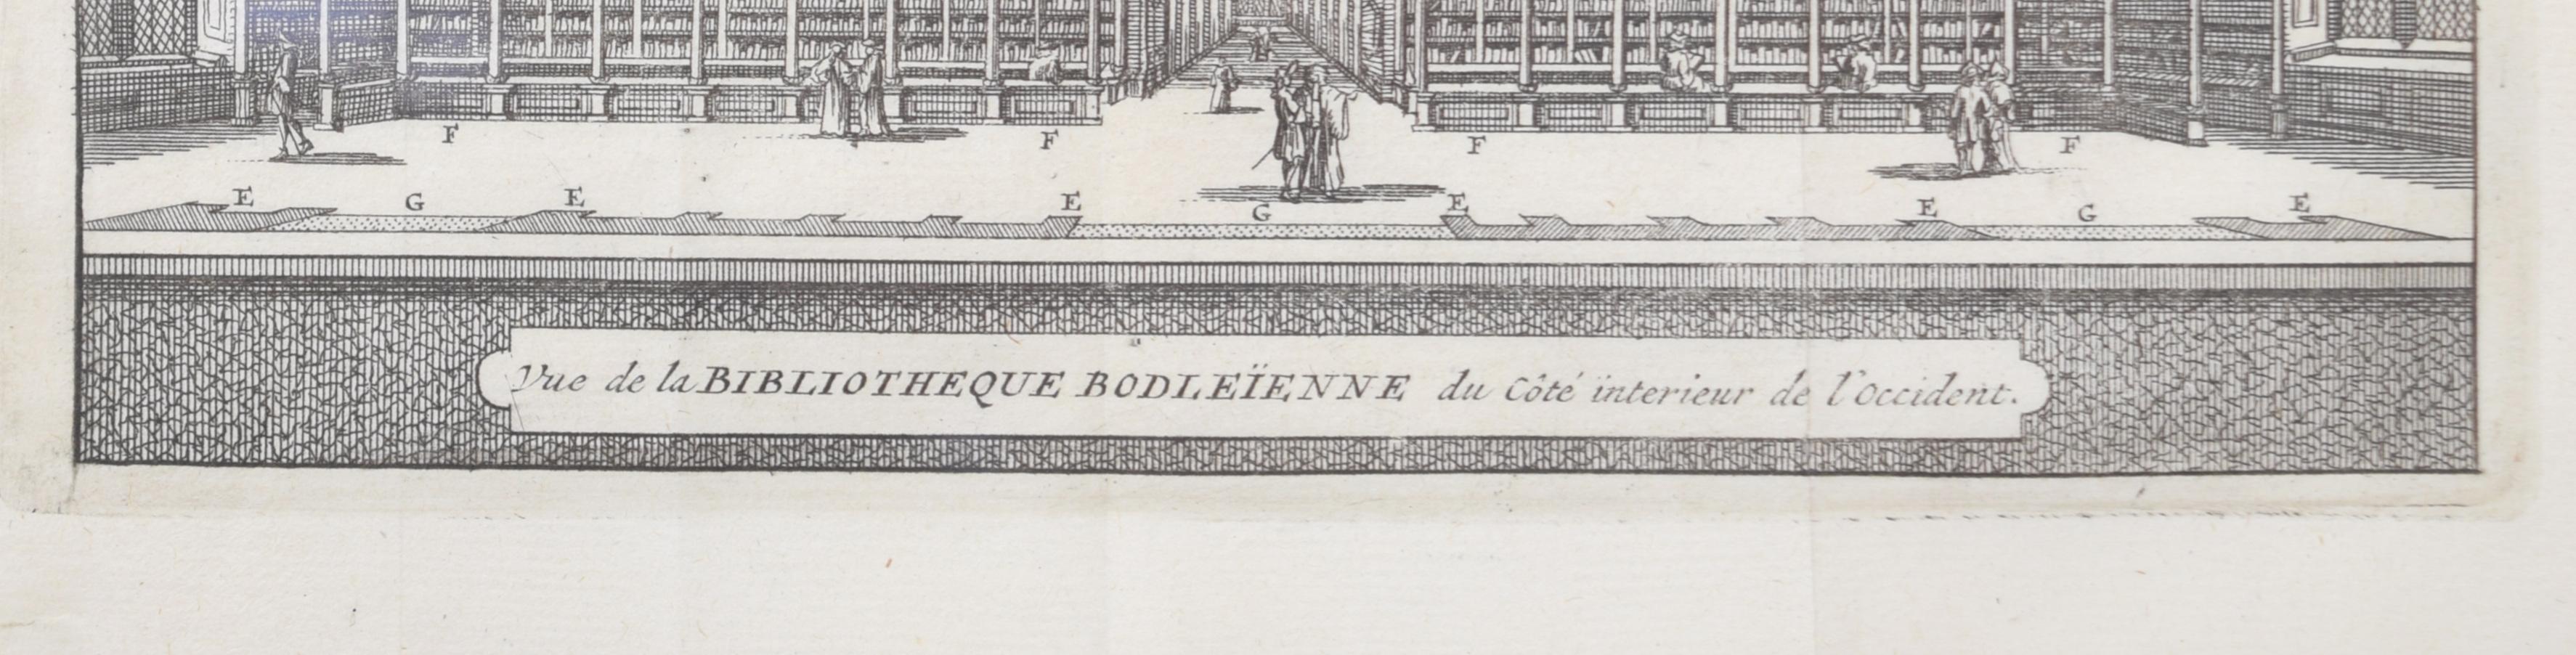 The Bodleian Library, Oxford University by Pieter van der Aa after David Loggan - Realist Print by Pieter Van Der Aa